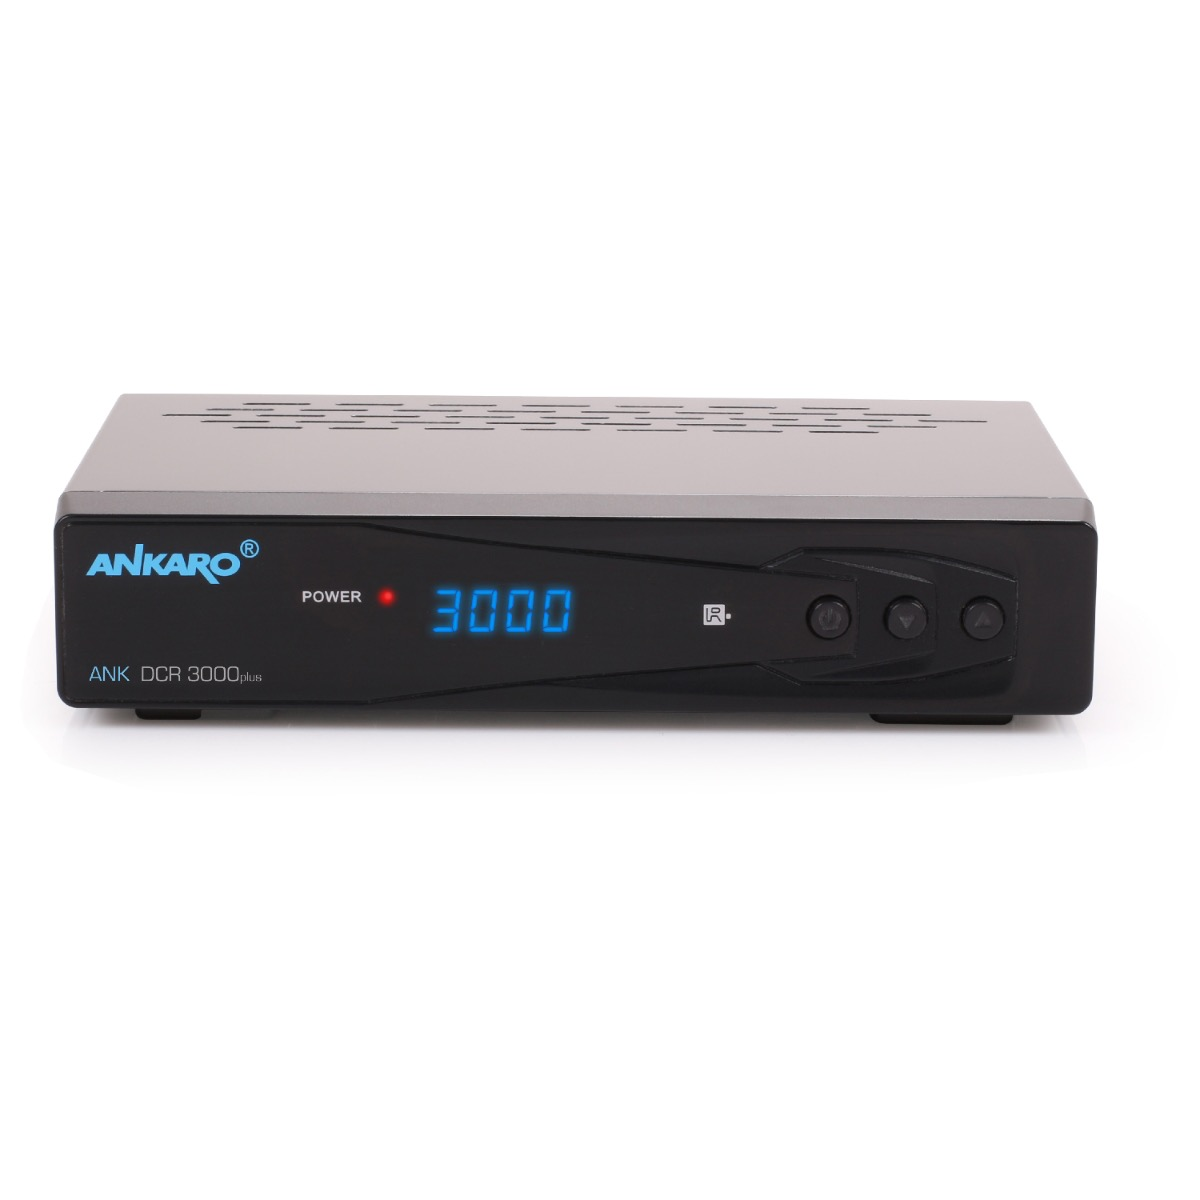 ANKARO schwarz) 1080p DVB-C, Kabel DVB-C, 3000 Full Receiver, (HDTV, Kabelreceiver DVB-C2, HD, DCR Digitaler ANK Plus,